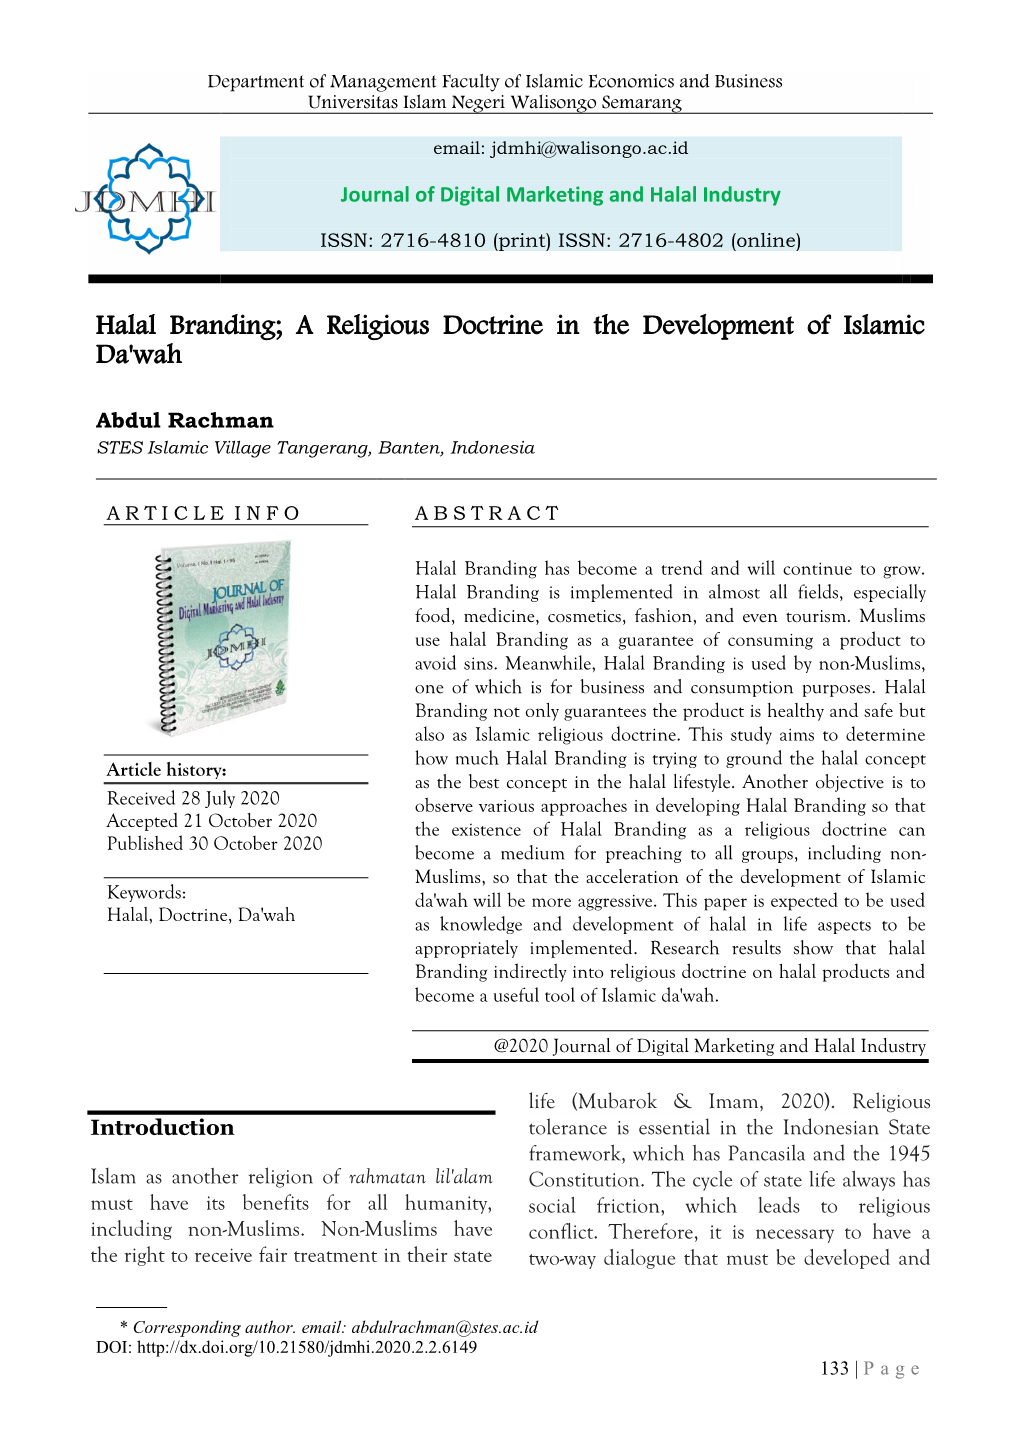 Halal Branding; a Religious Doctrine in the Development of Islamic Da'wah